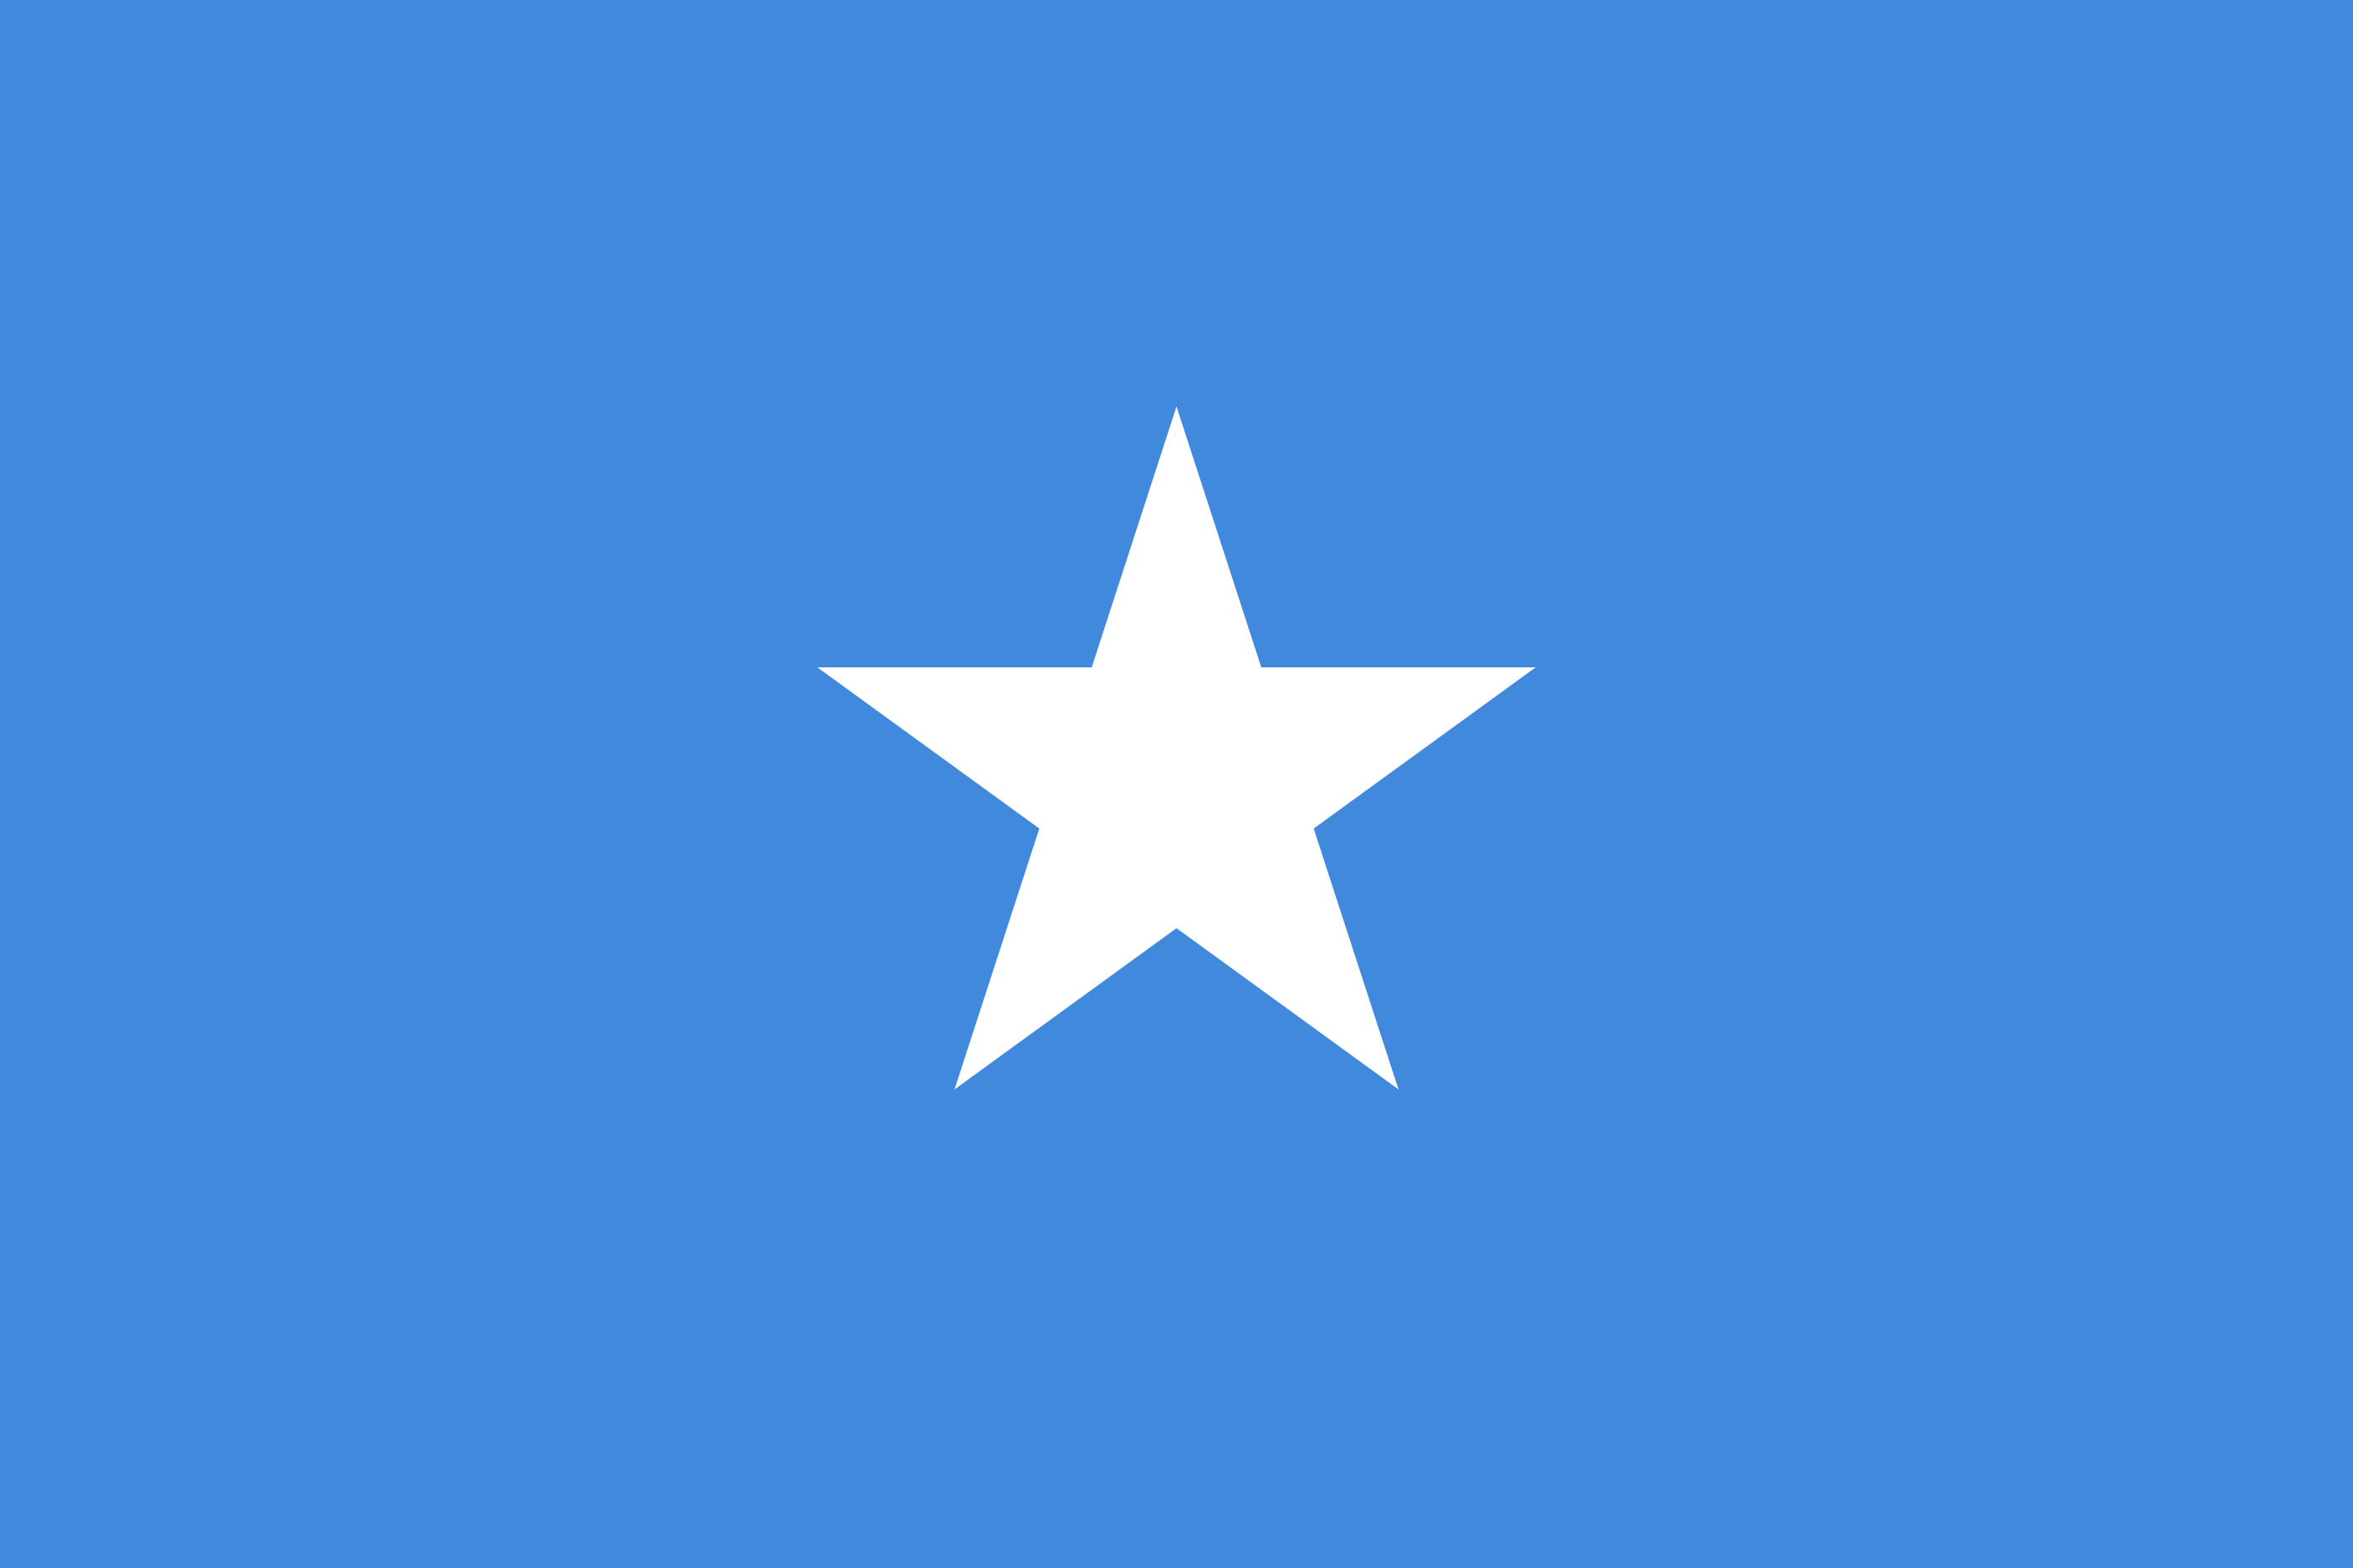 Free Somalia Flag Documents: PDF, DOC, DOCX, HTML & More!